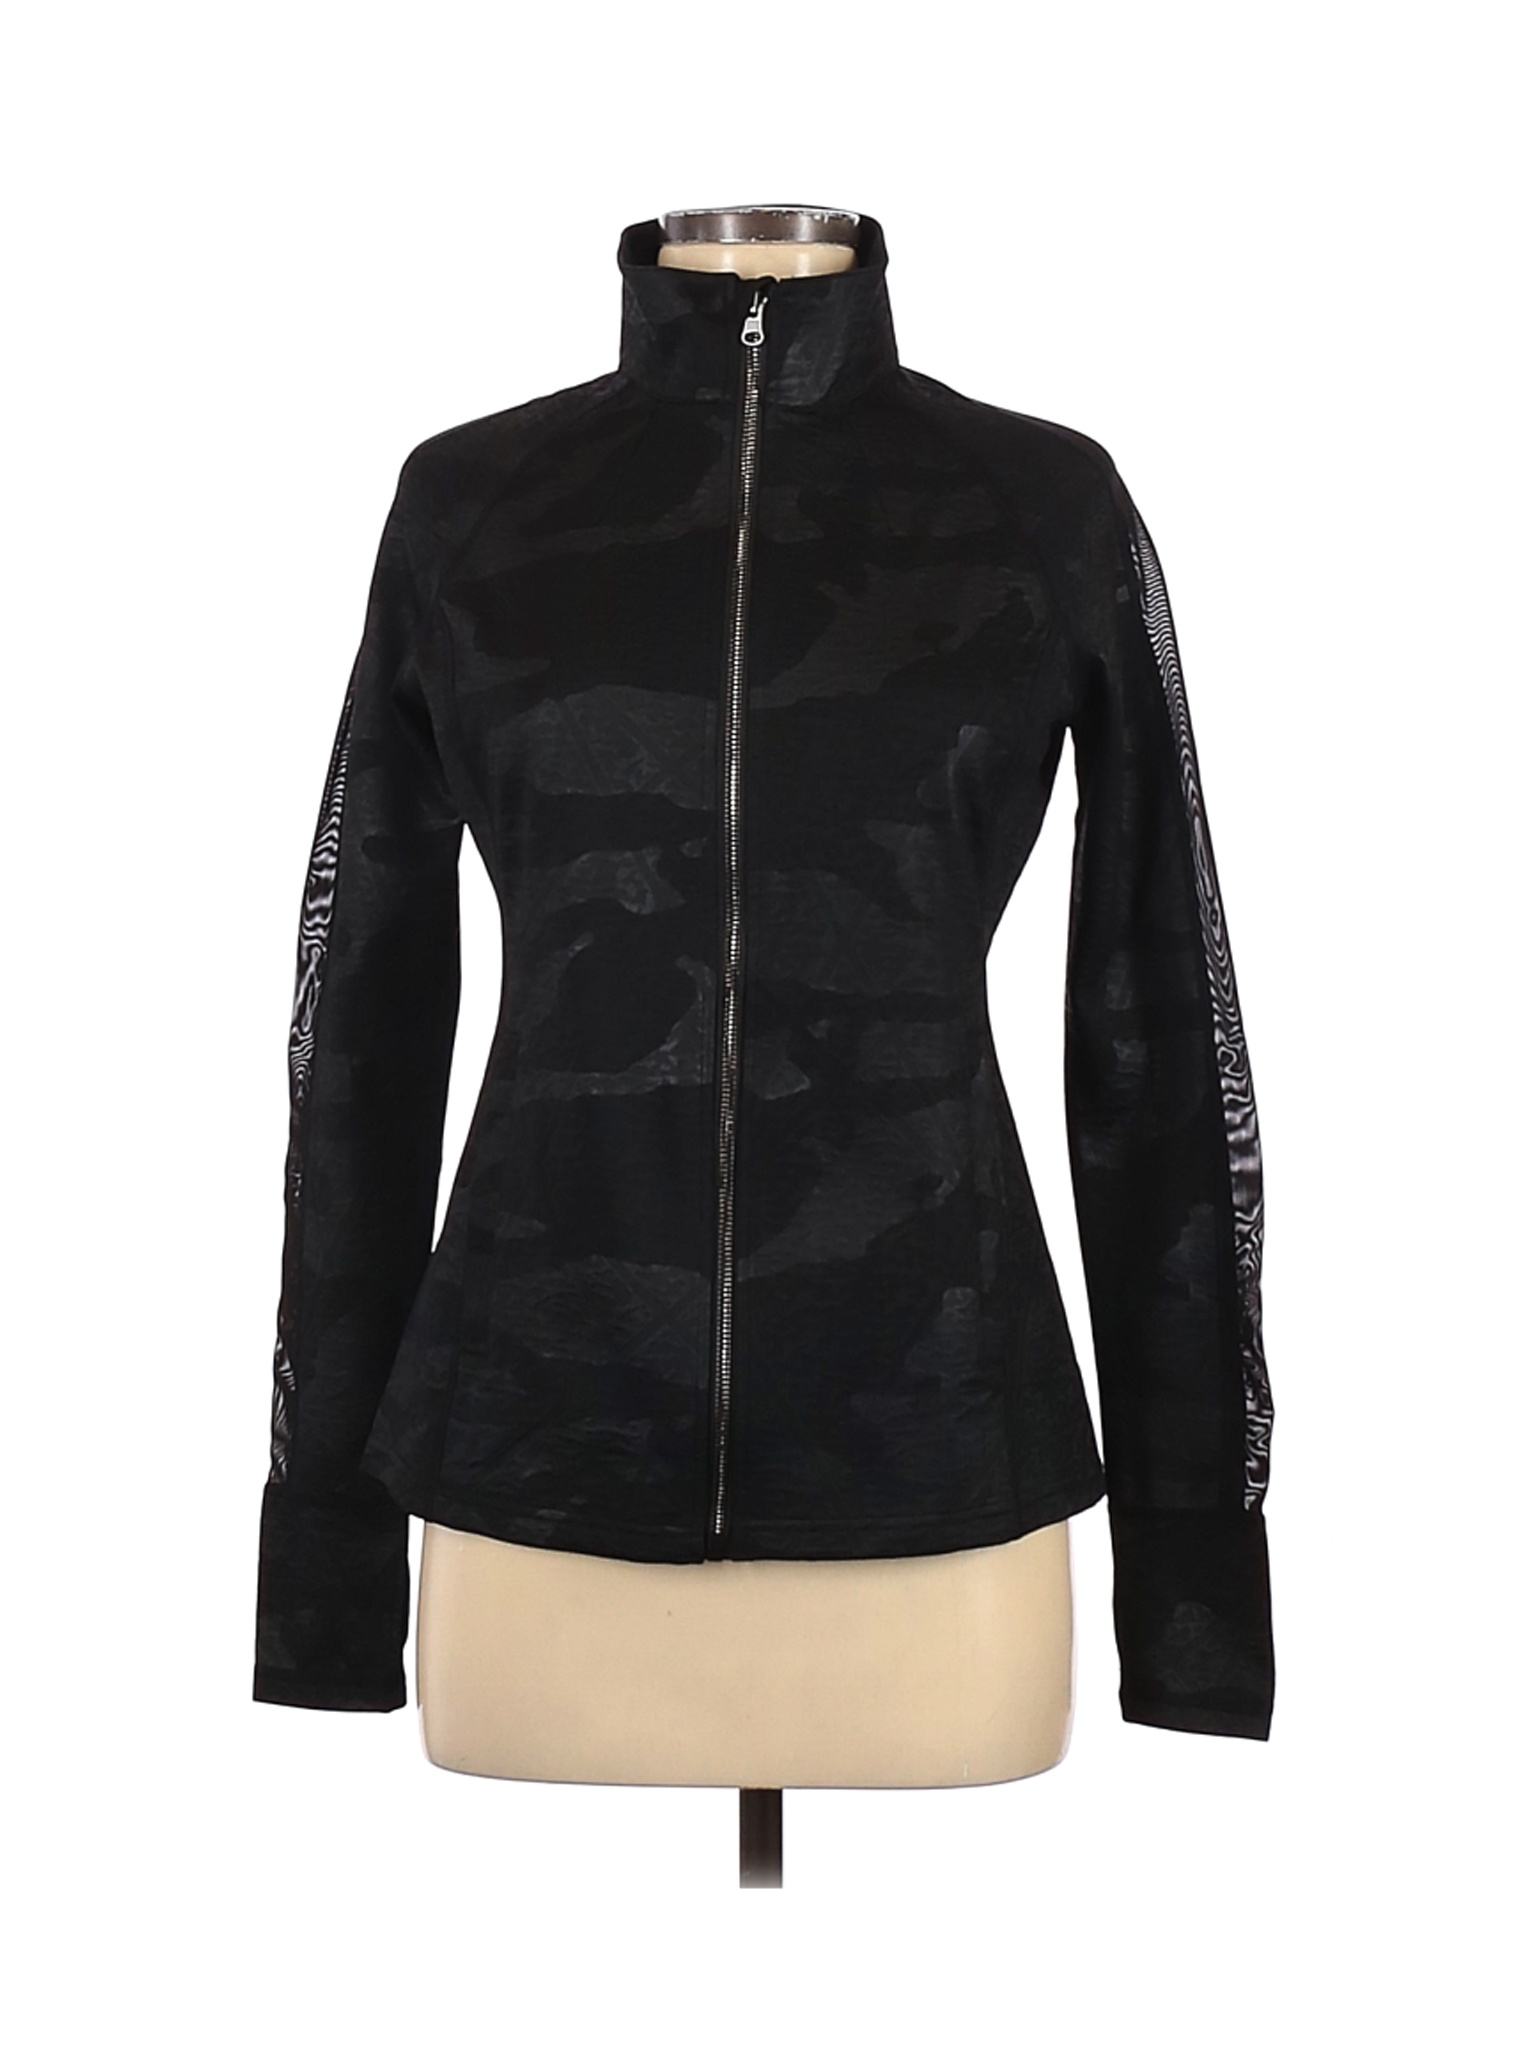 Mono b Women Black Jacket S | eBay